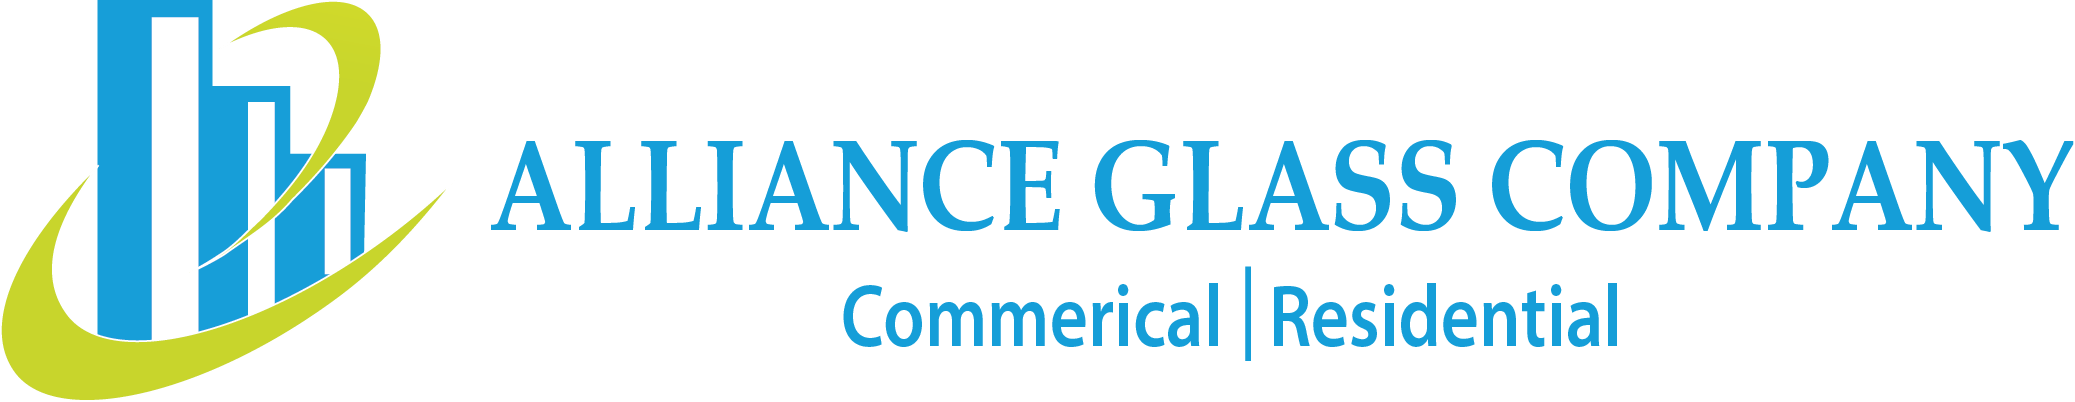 Alliance Glass